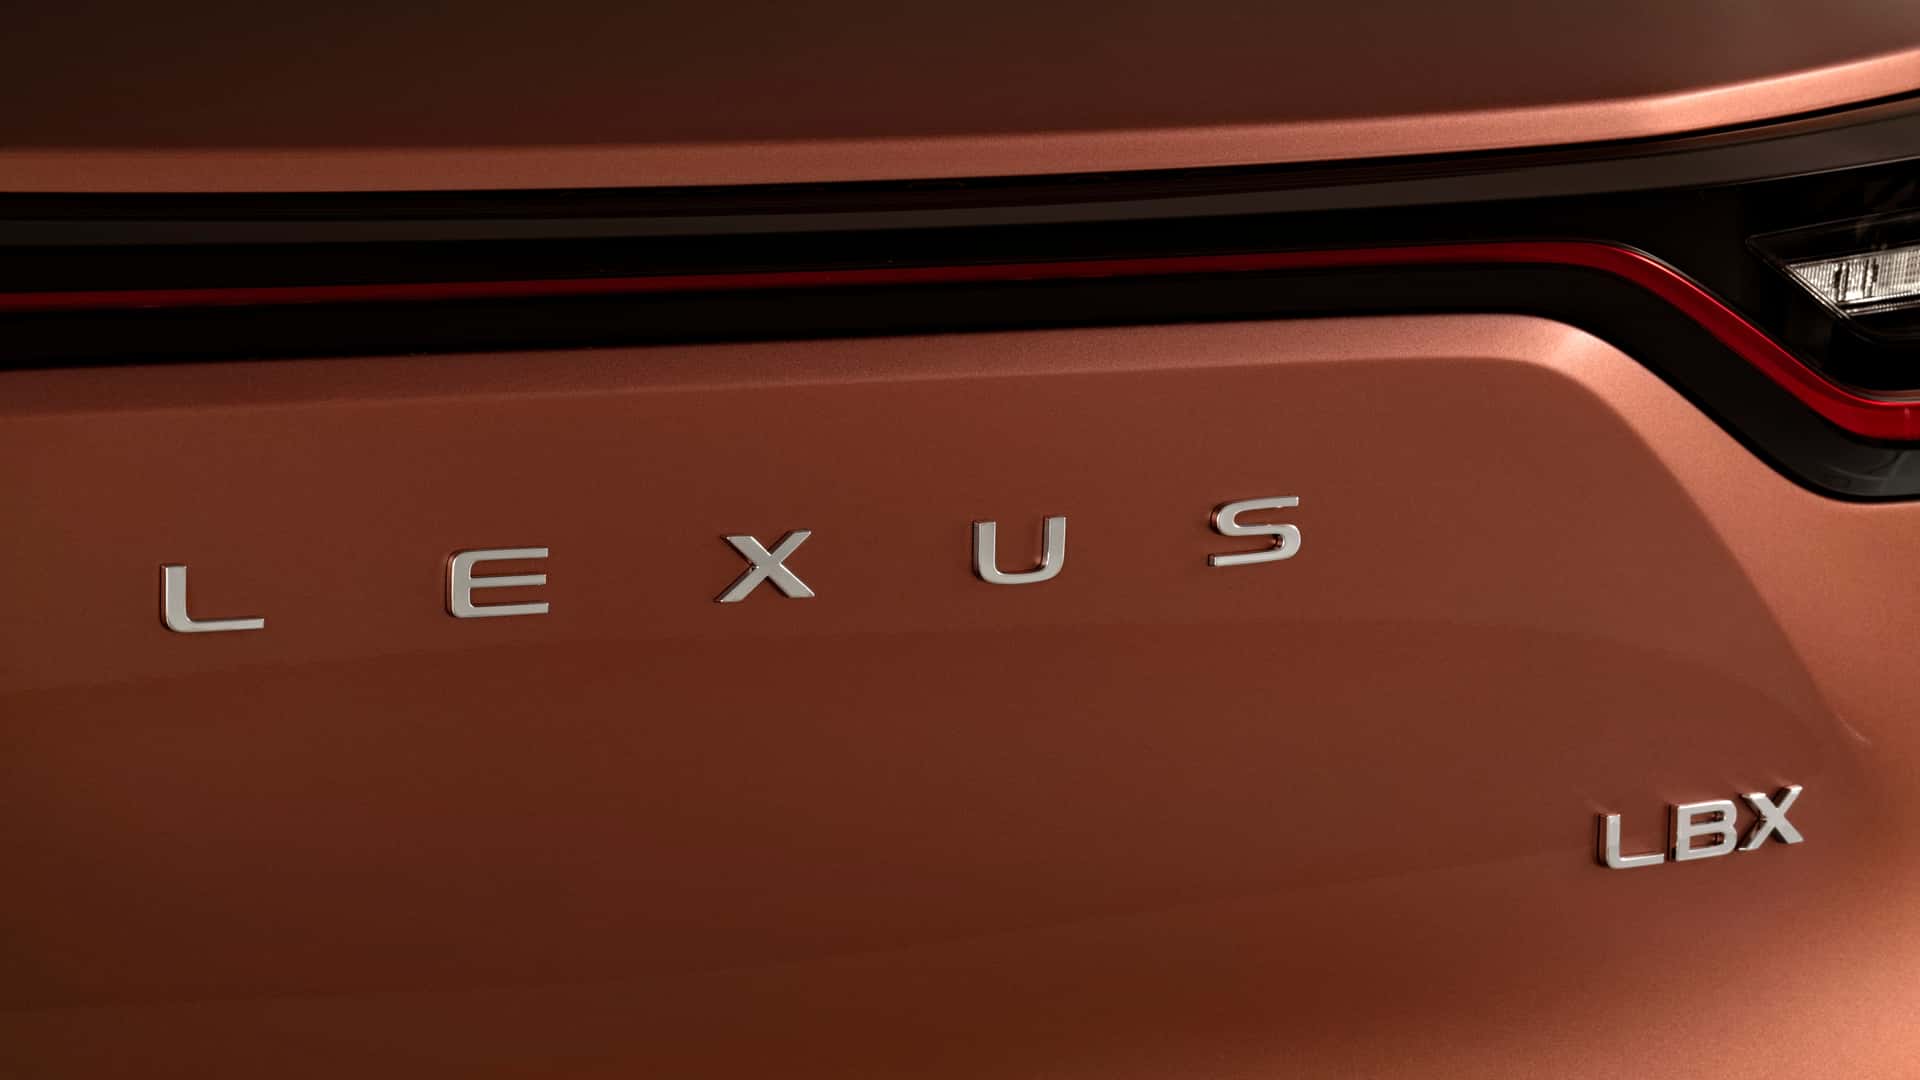 Ra mắt Lexus LBX - SUV nhỏ nhất của Lexus